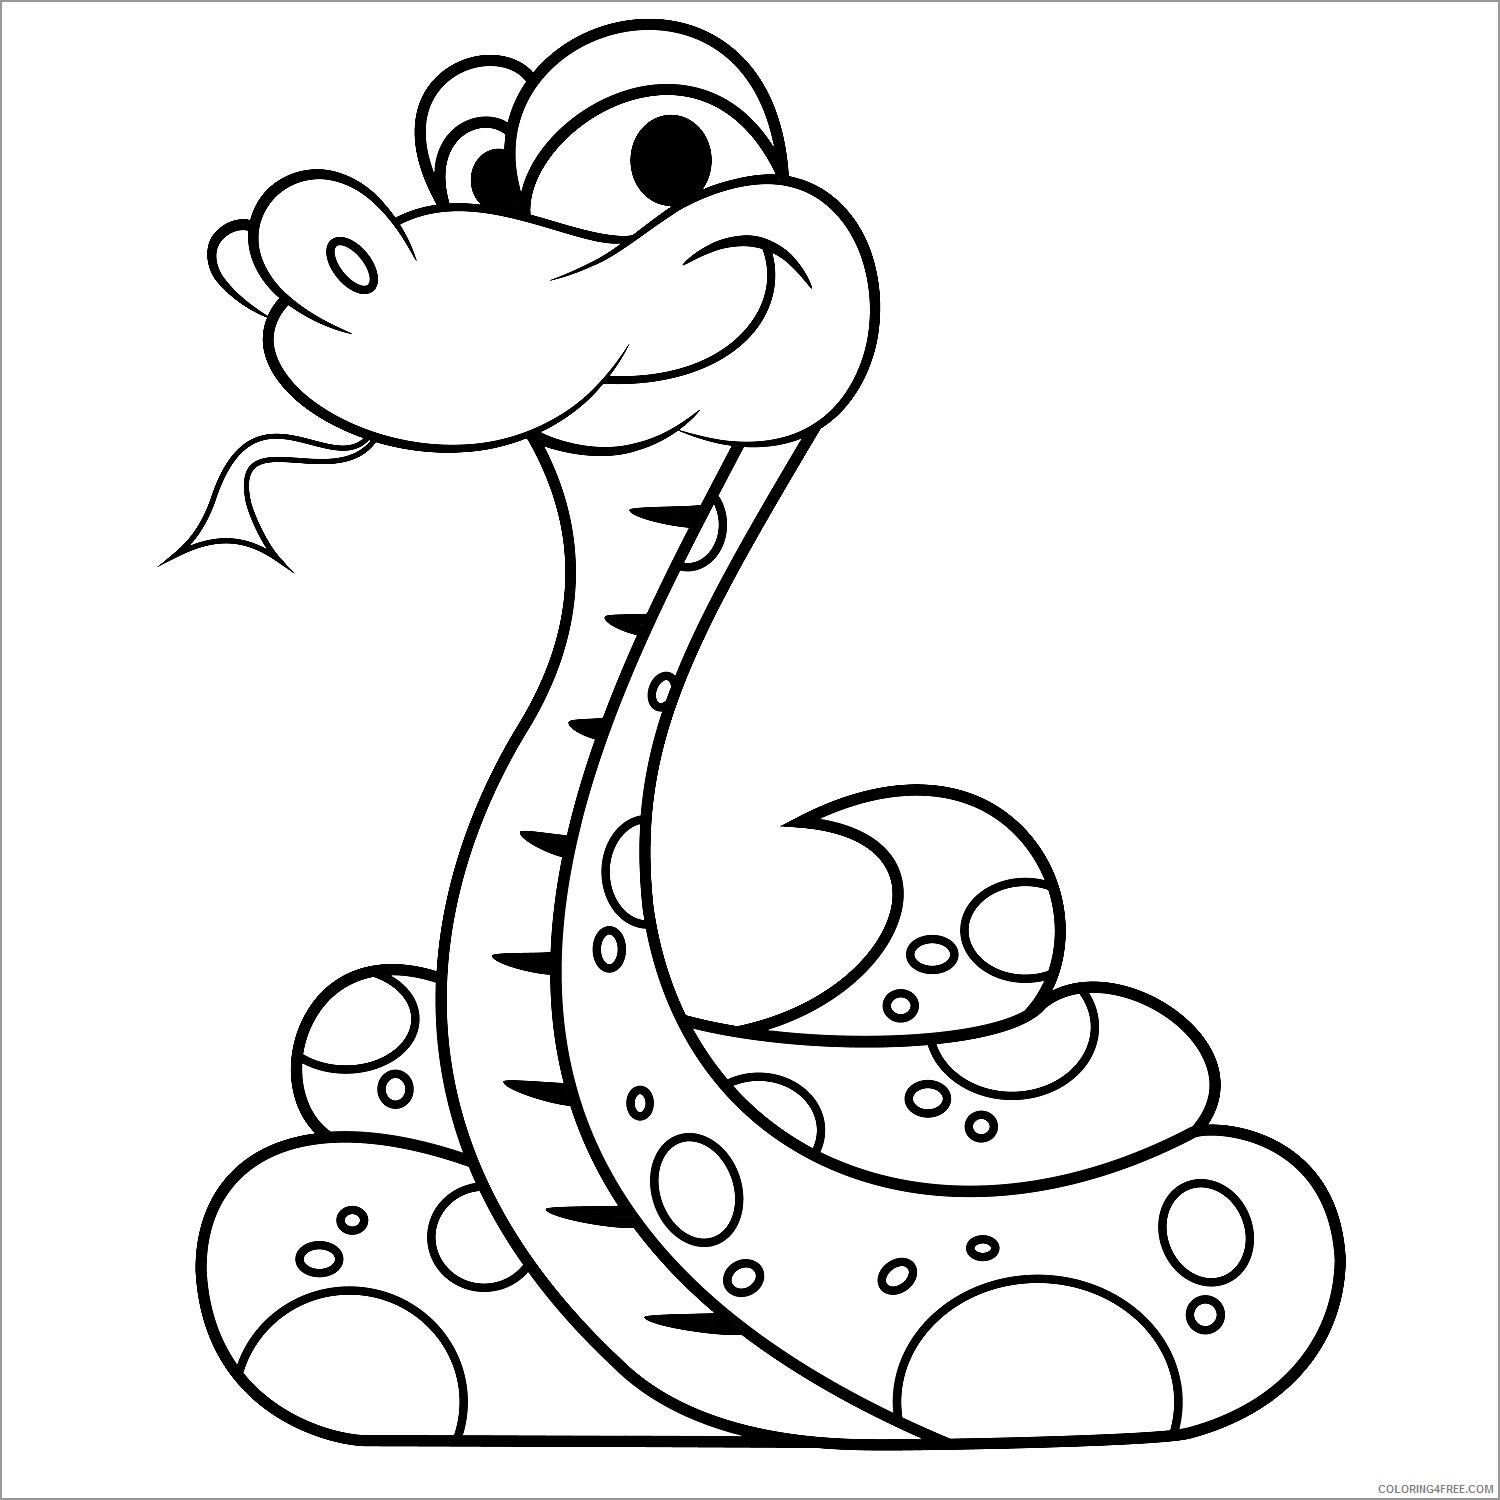 Snake Coloring Pages Animal Printable Sheets cartoon snake 2021 4547 Coloring4free